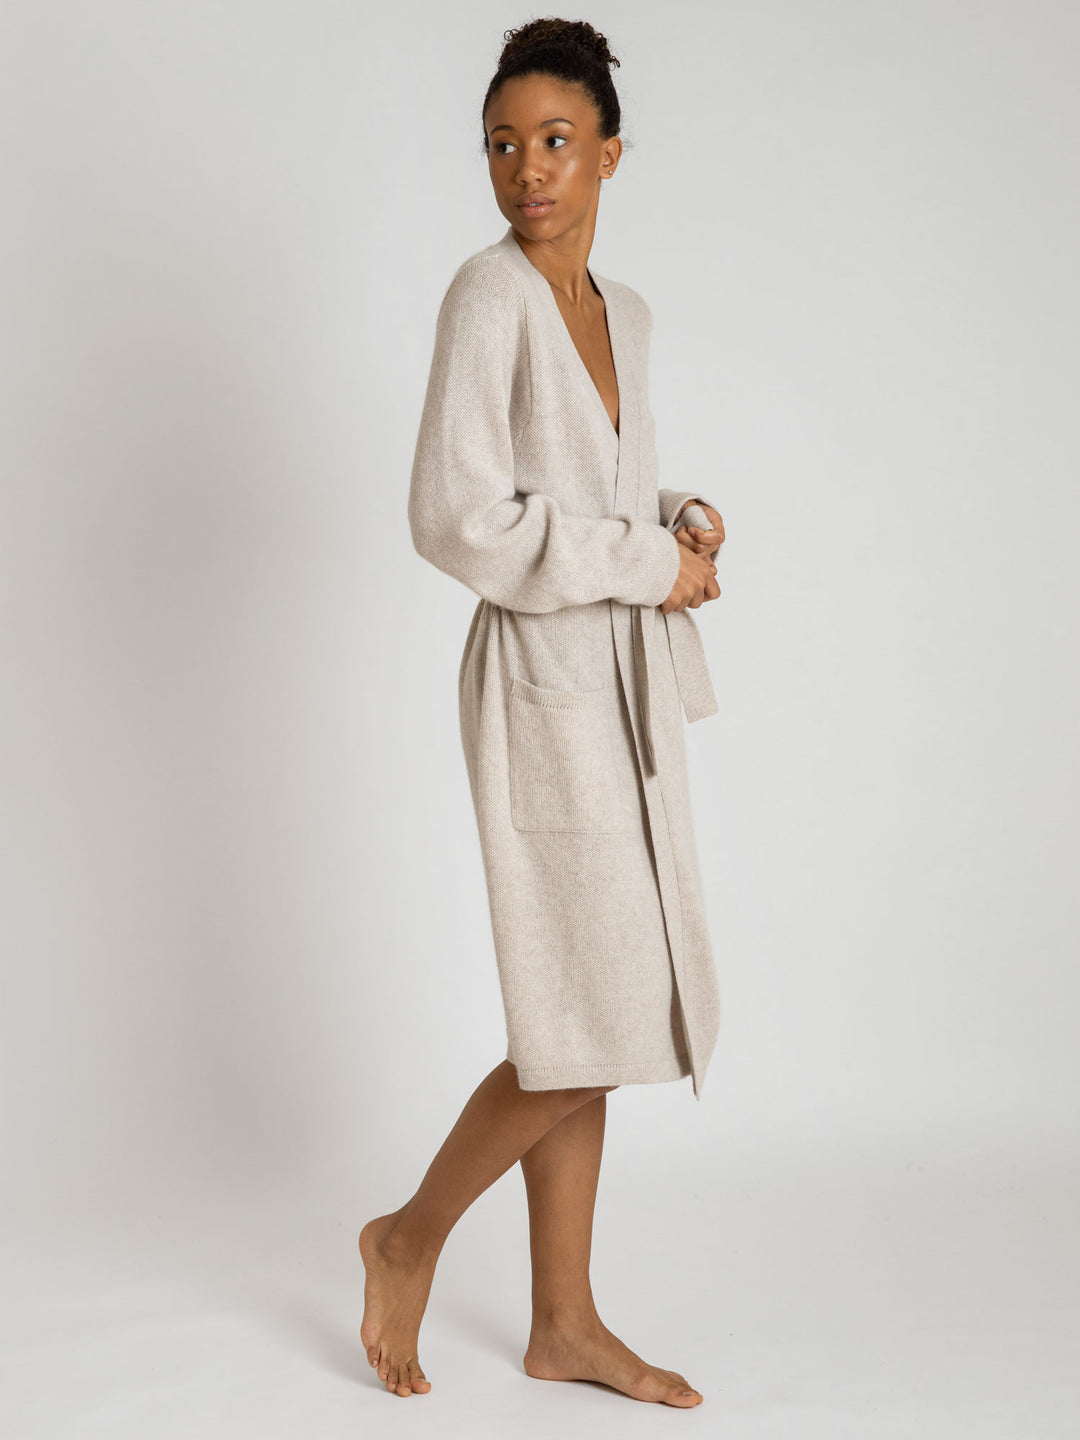 Soft cashmere robe Lux in 100% cashmere by Kashmina. Scandinavian design. Color: beige.